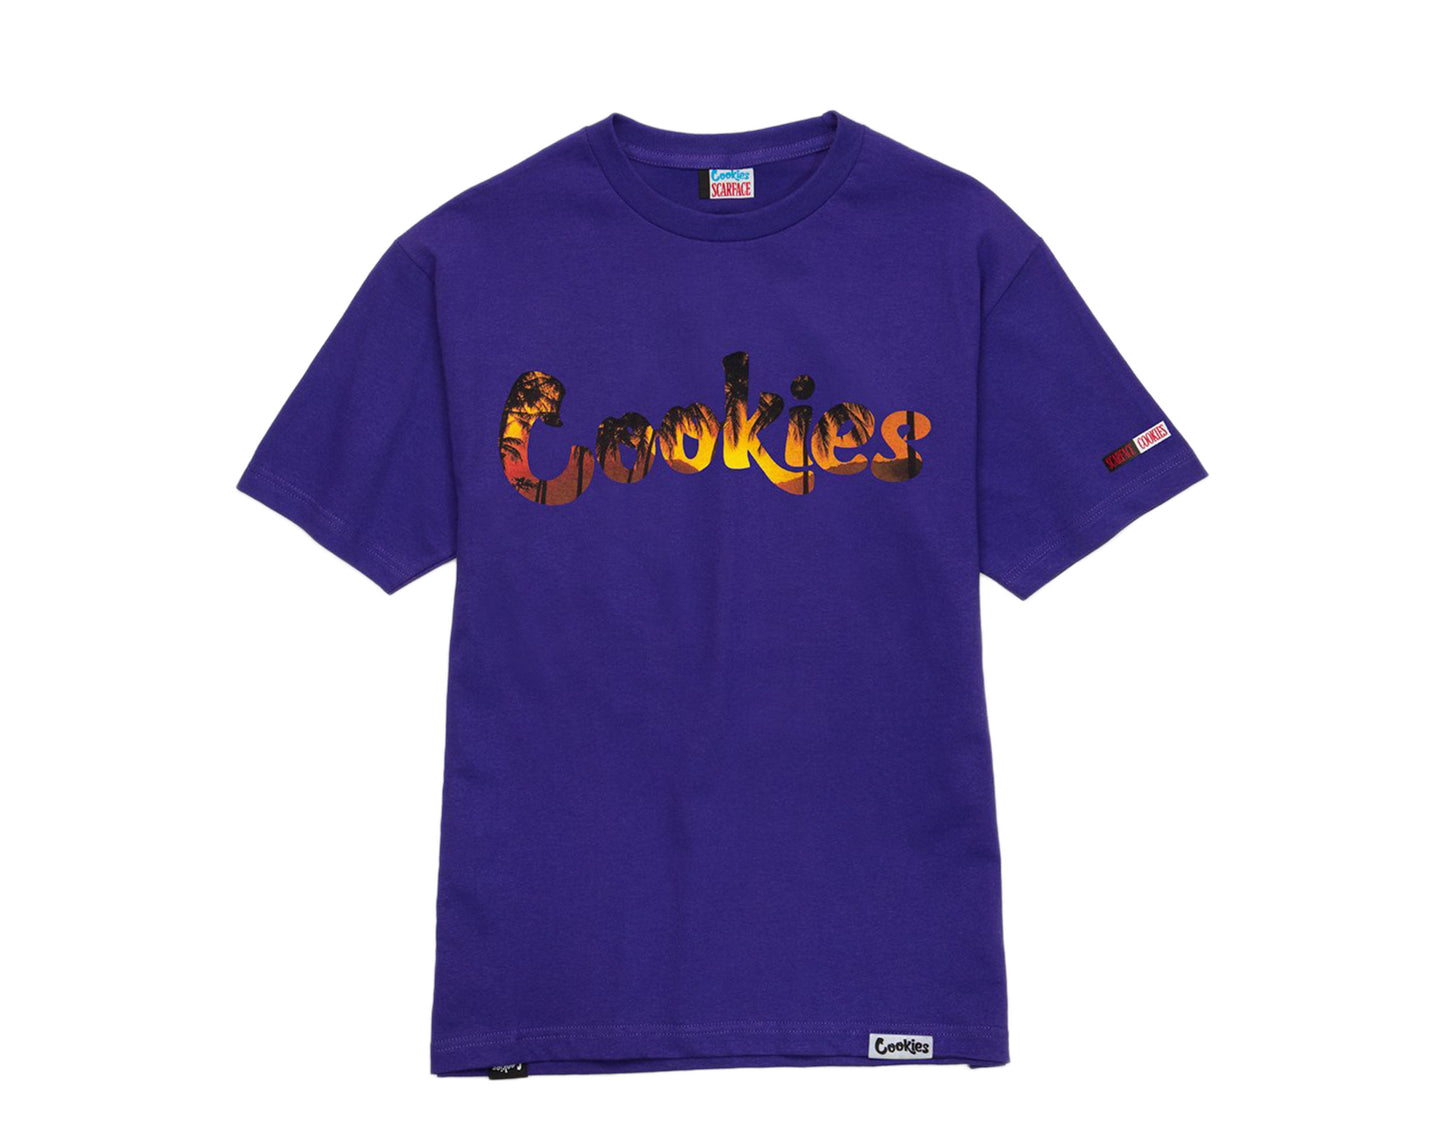 Cookies x Scarface Tropical Sunset Purple Men's Tee Shirt 1536T3417-PUR